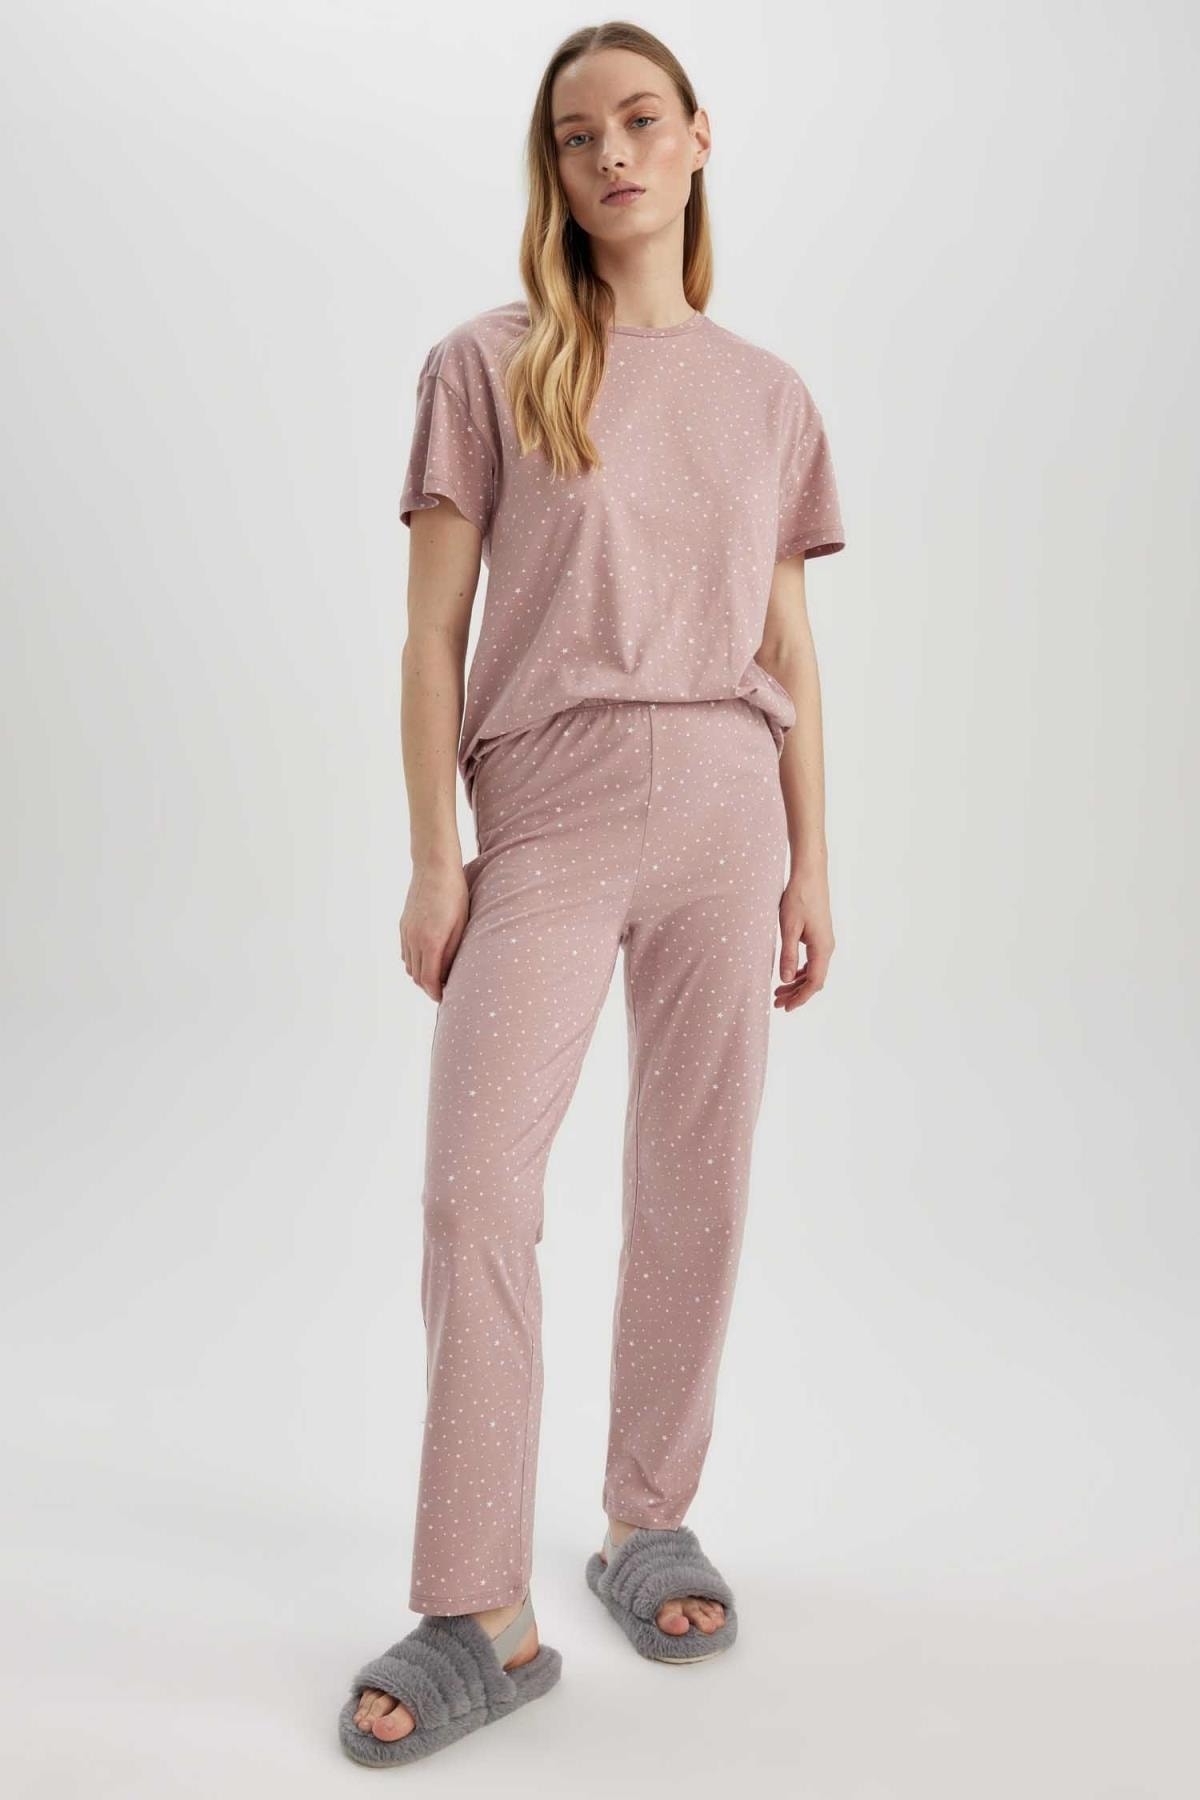 DeFacto Große Größen in Pyjama-Set Rosa Unifarben